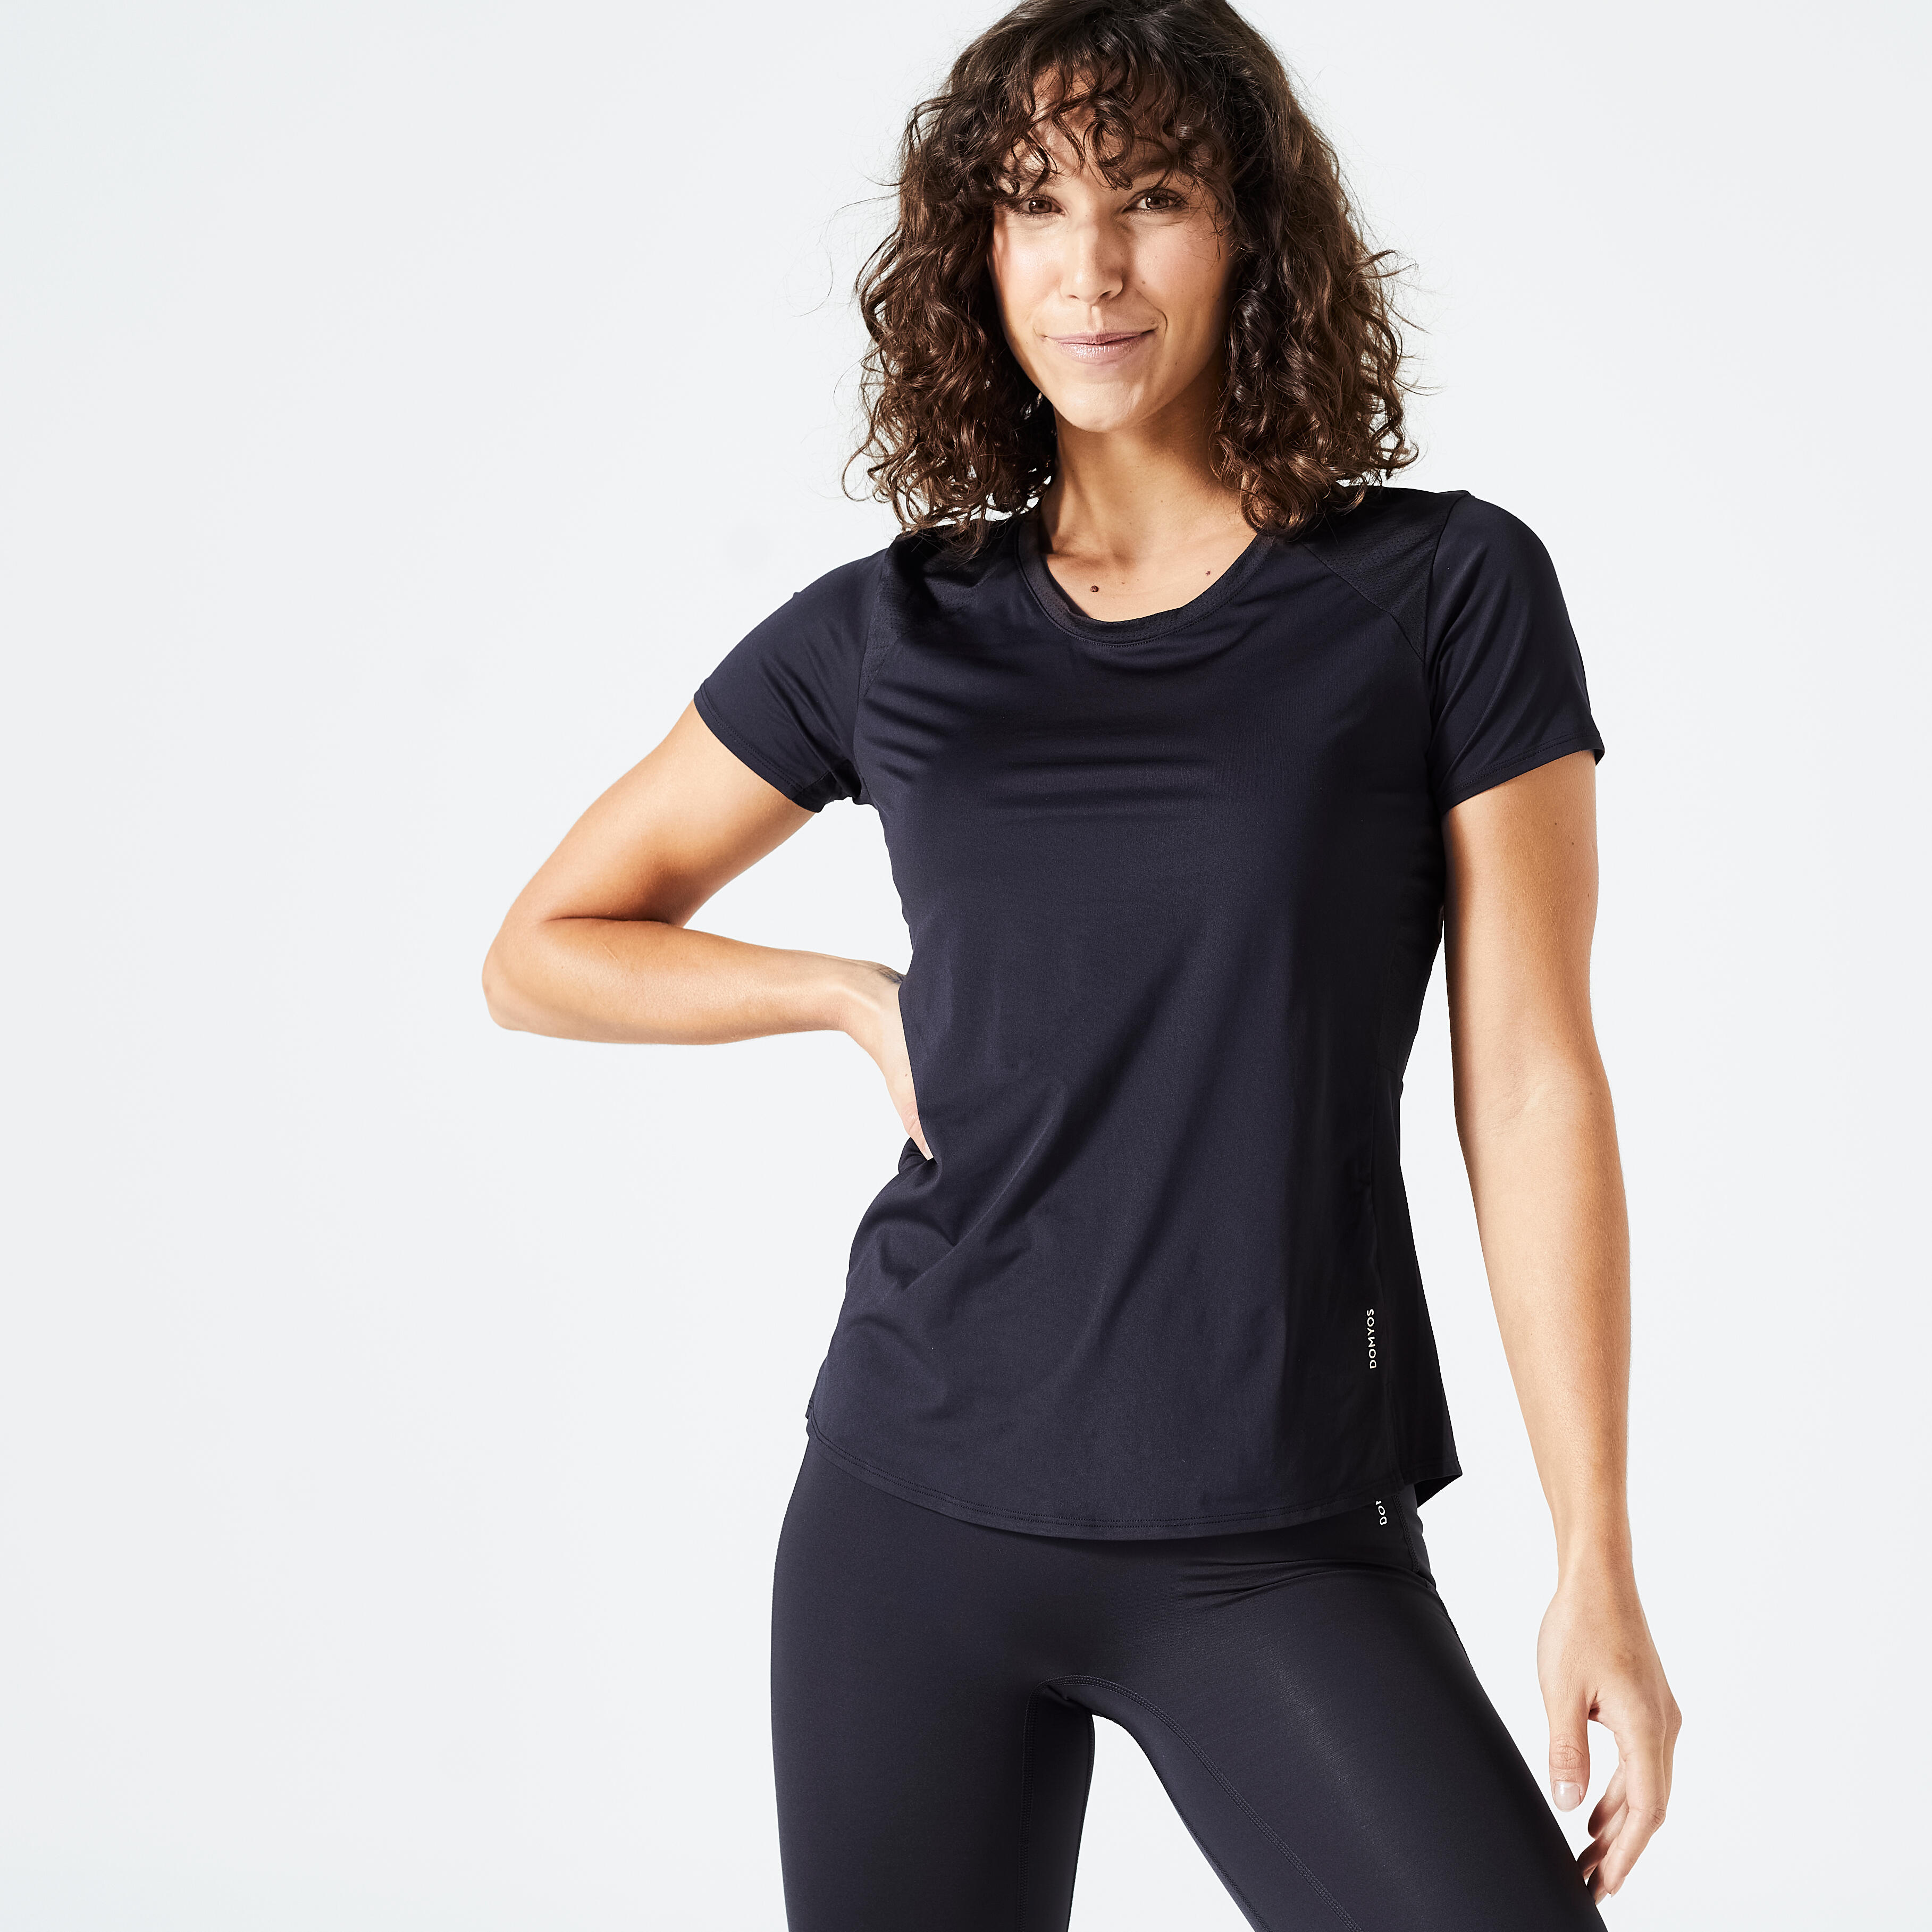 Women Sports Gym T-shirt Loose Fit - Black Grey